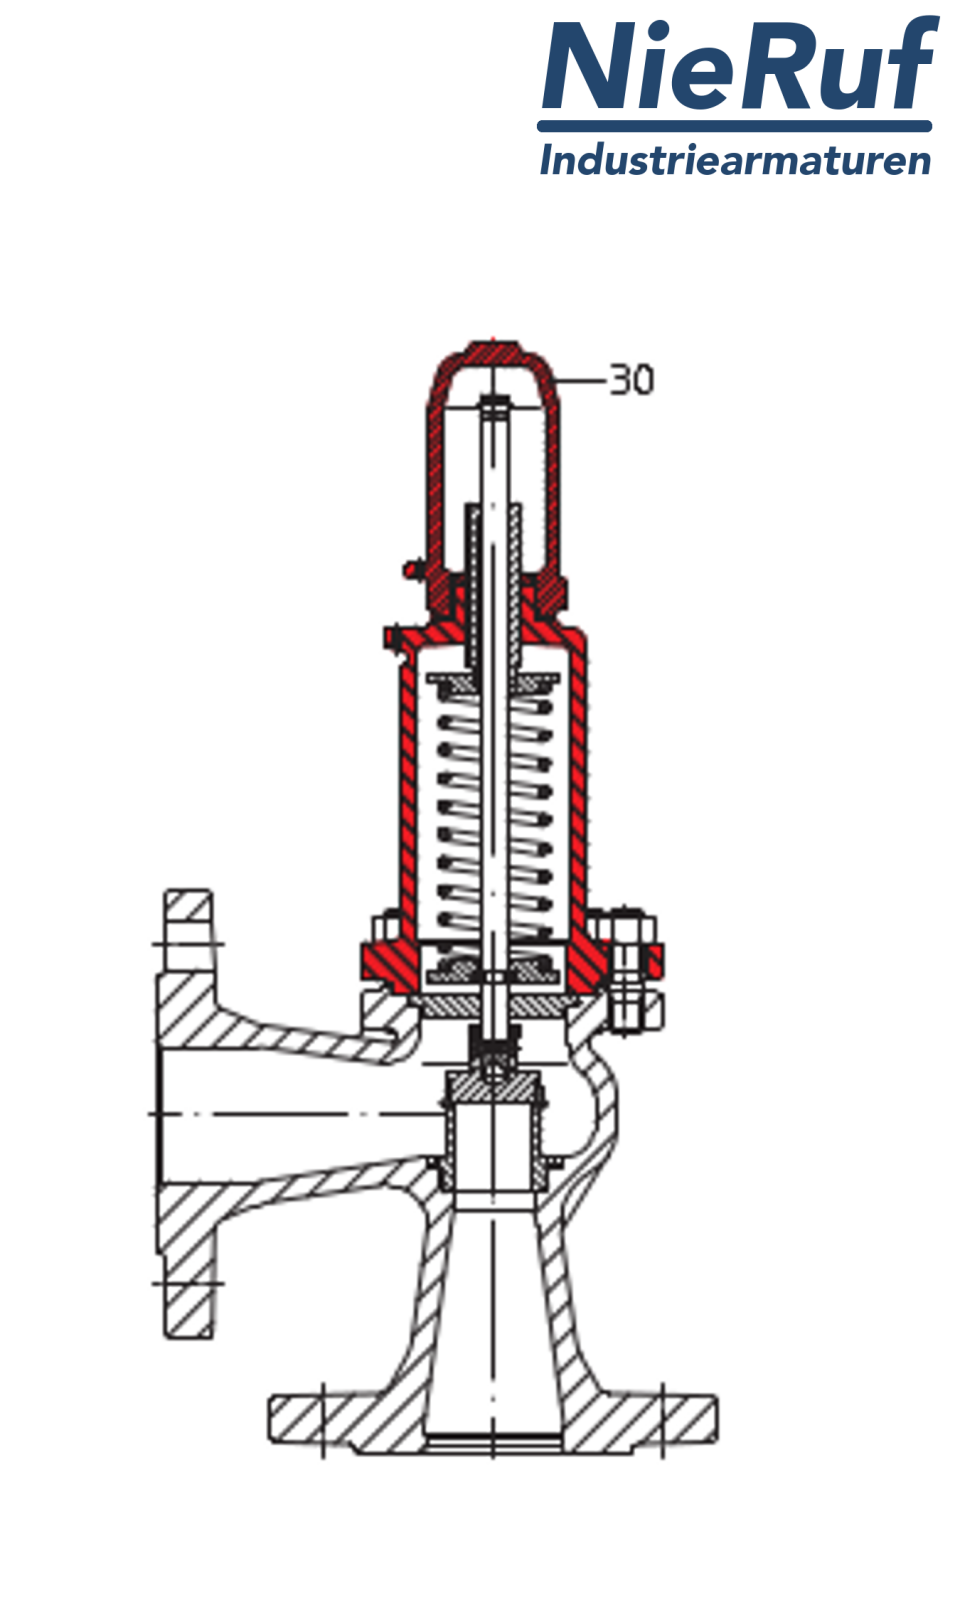 flange-safety valve DN20/DN20 SF0101, cast iron EN-JL1040 FPM, without lever